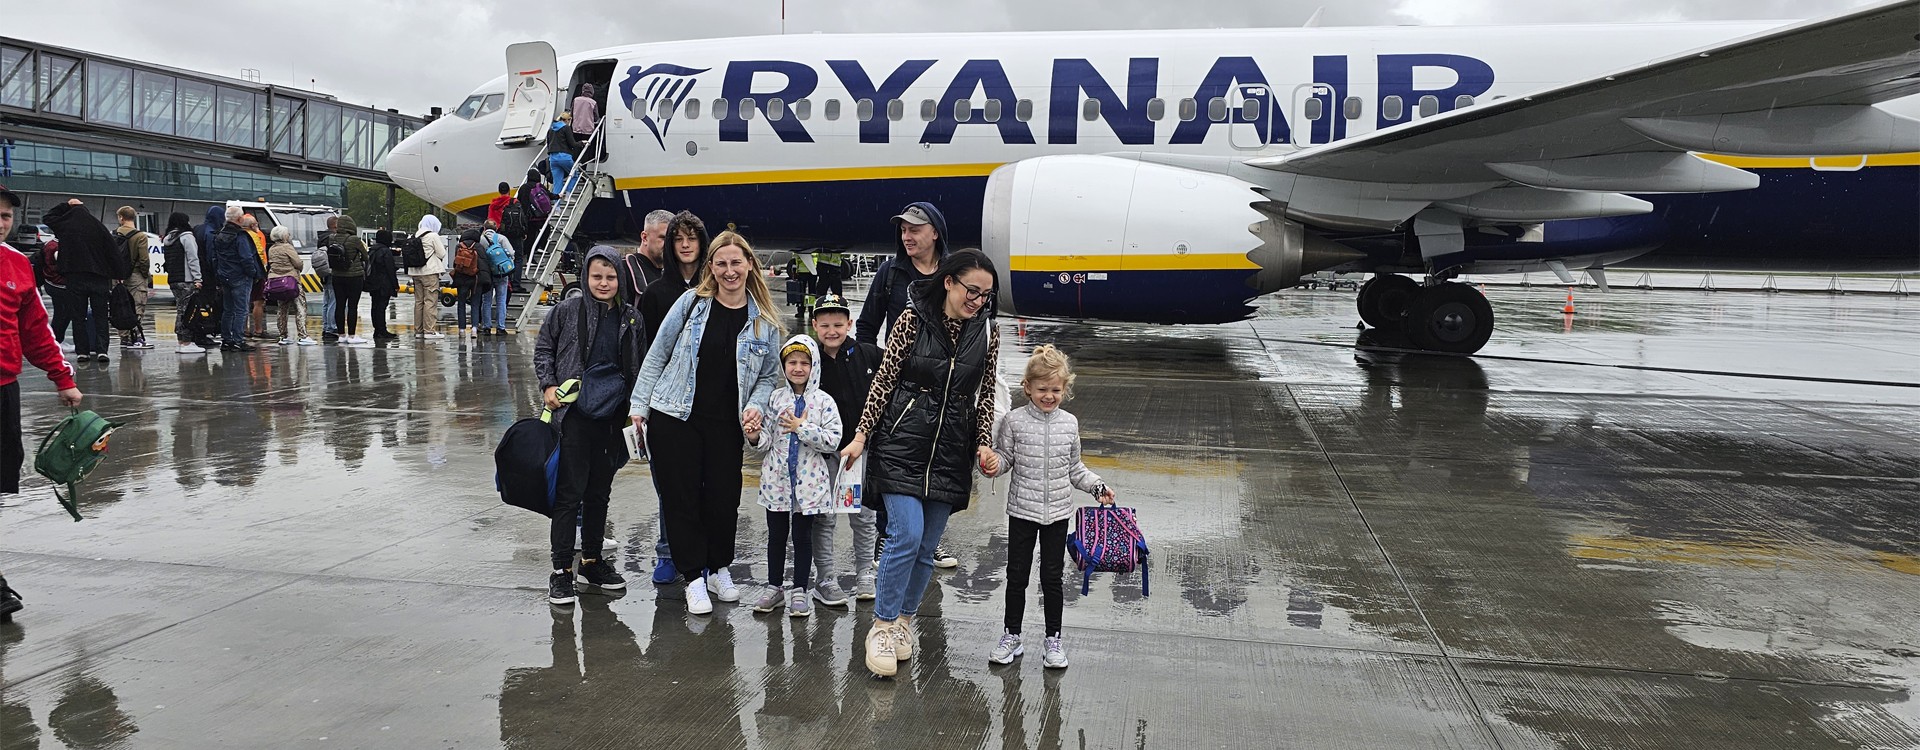 Uforglemmelig Bryllupsrejse med Ryanair